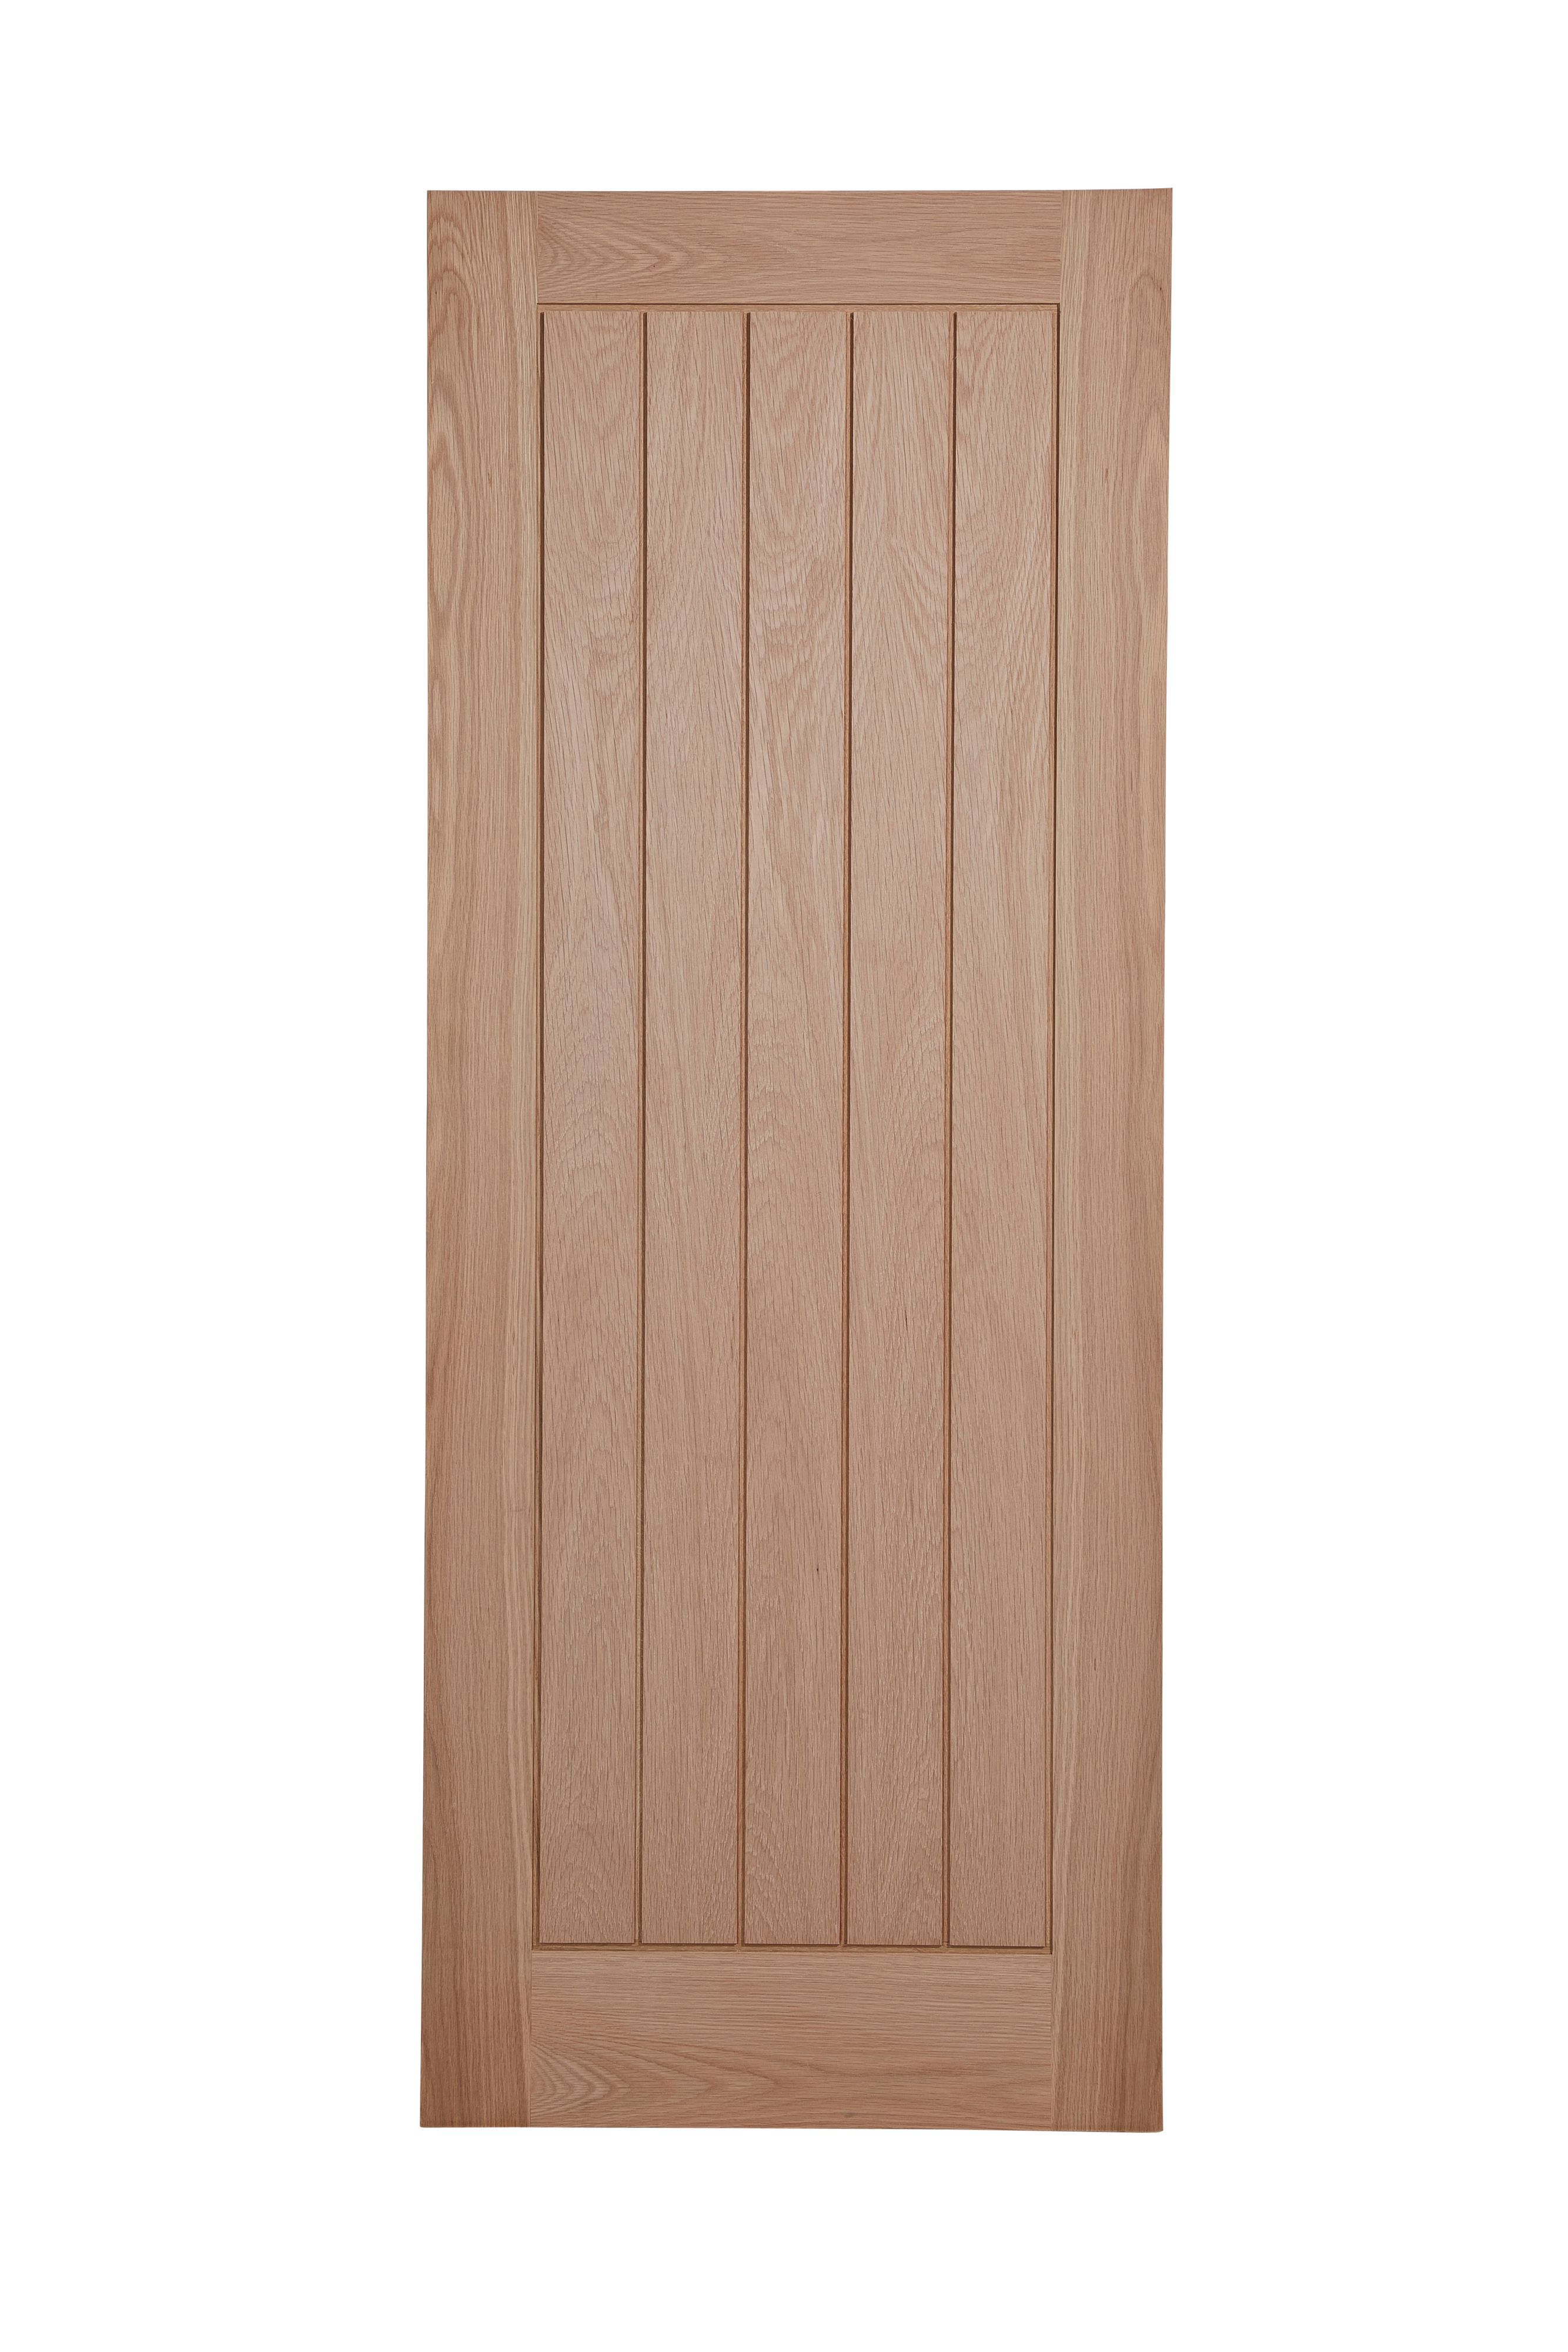 Unglazed Cottage Oak veneer Internal Fire door, (H)1981mm (W)762mm (T)44mm